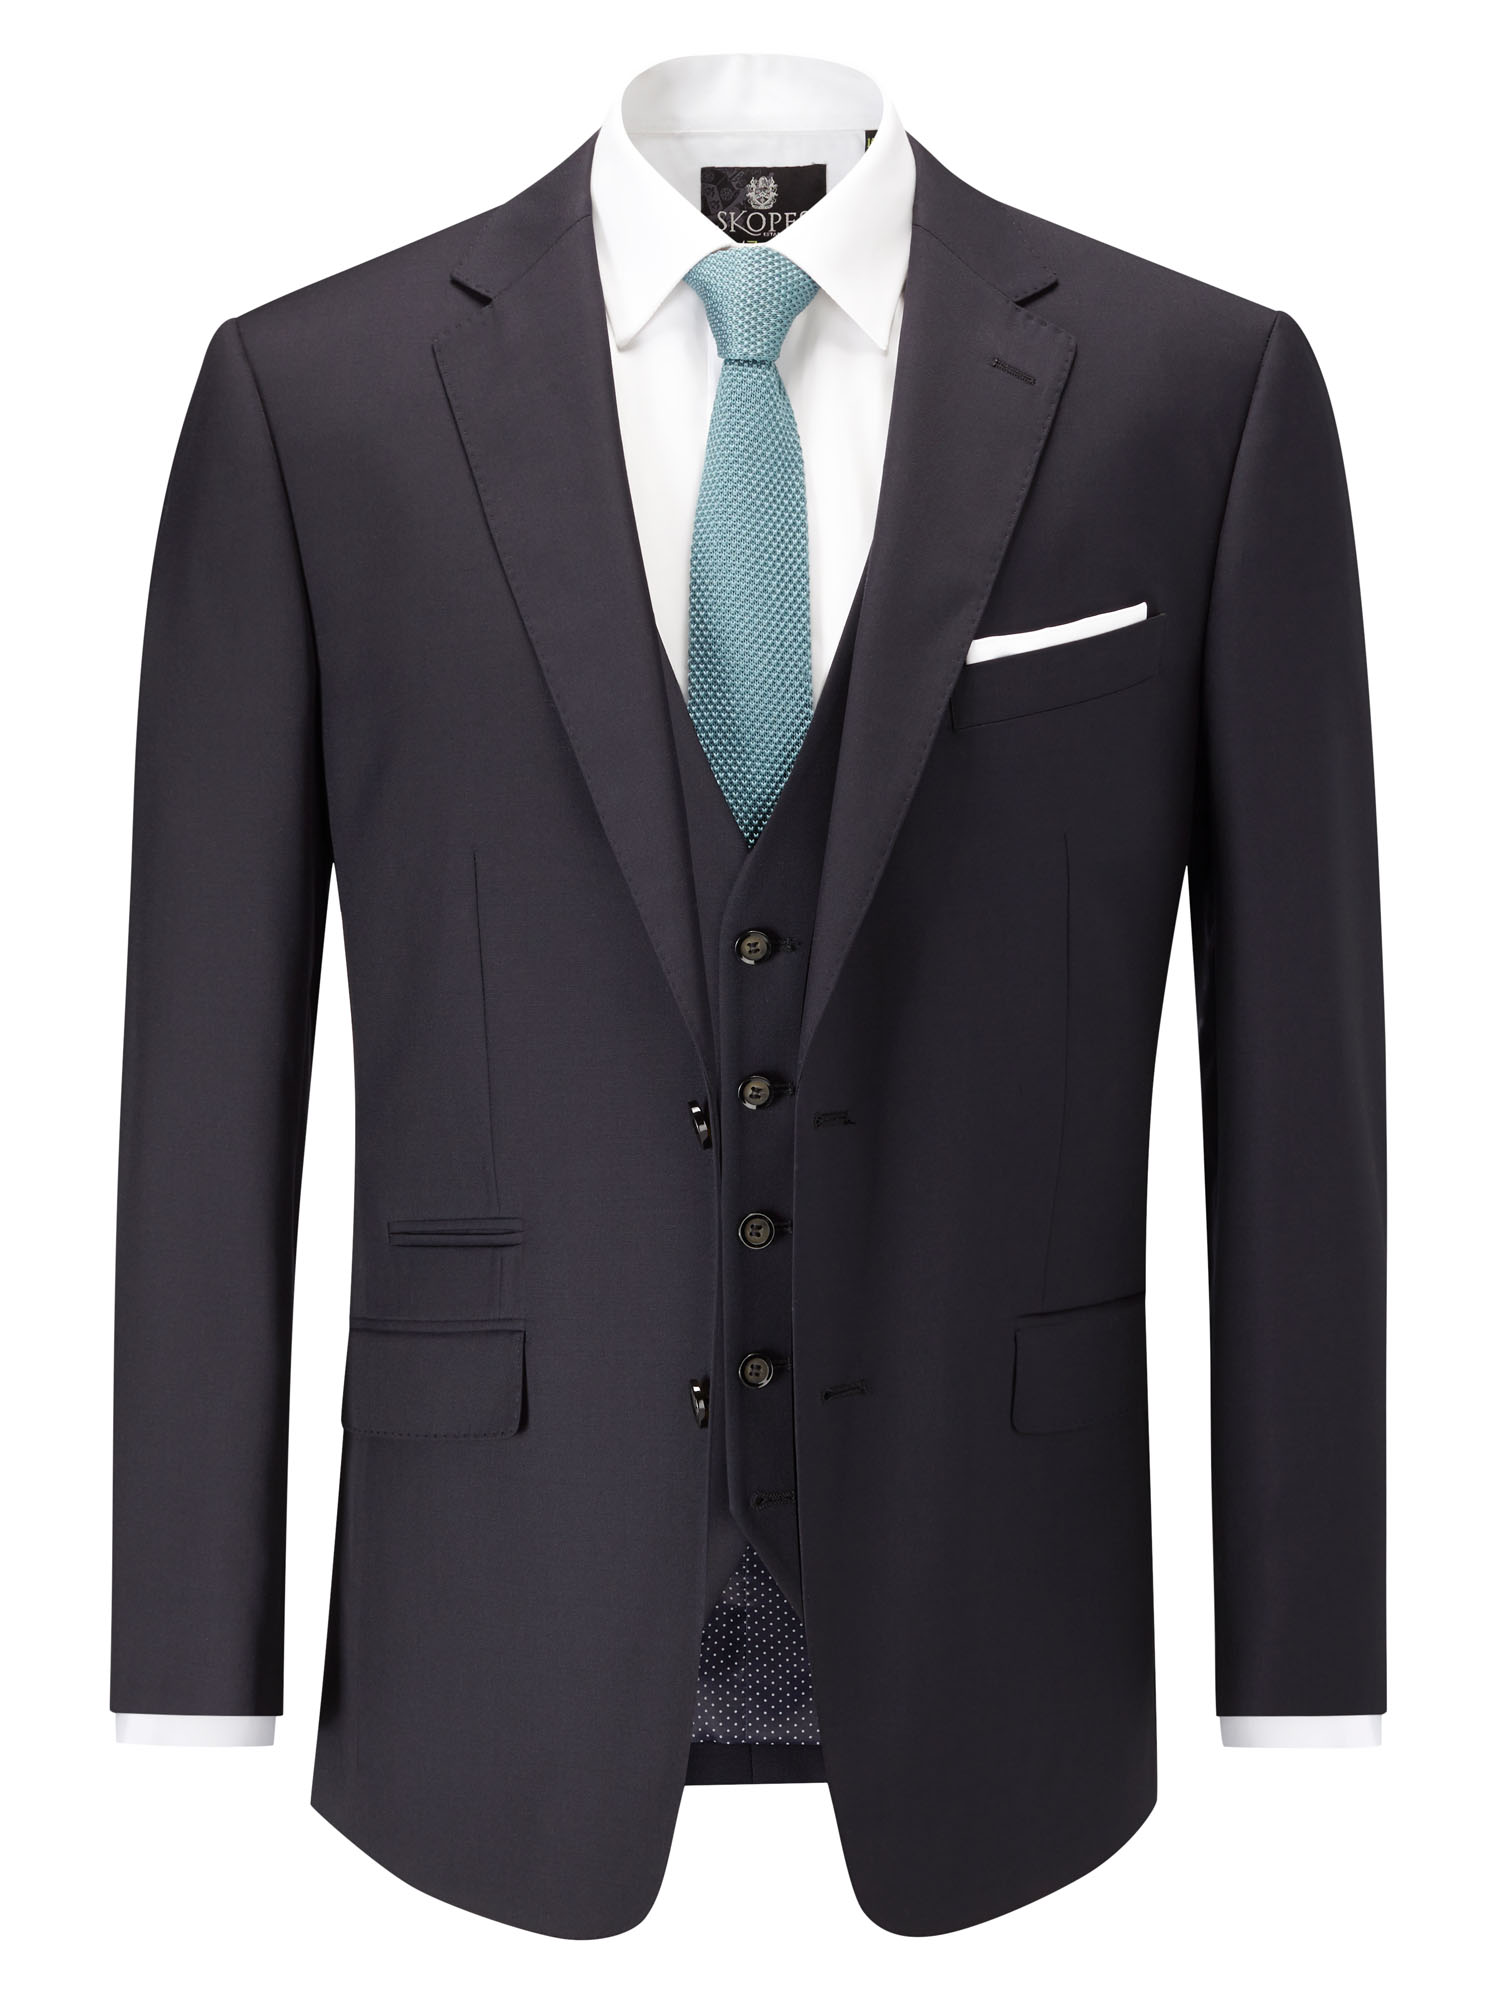 Joss Navy 3 Piece Suit - Tom Murphy's Formal and Menswear